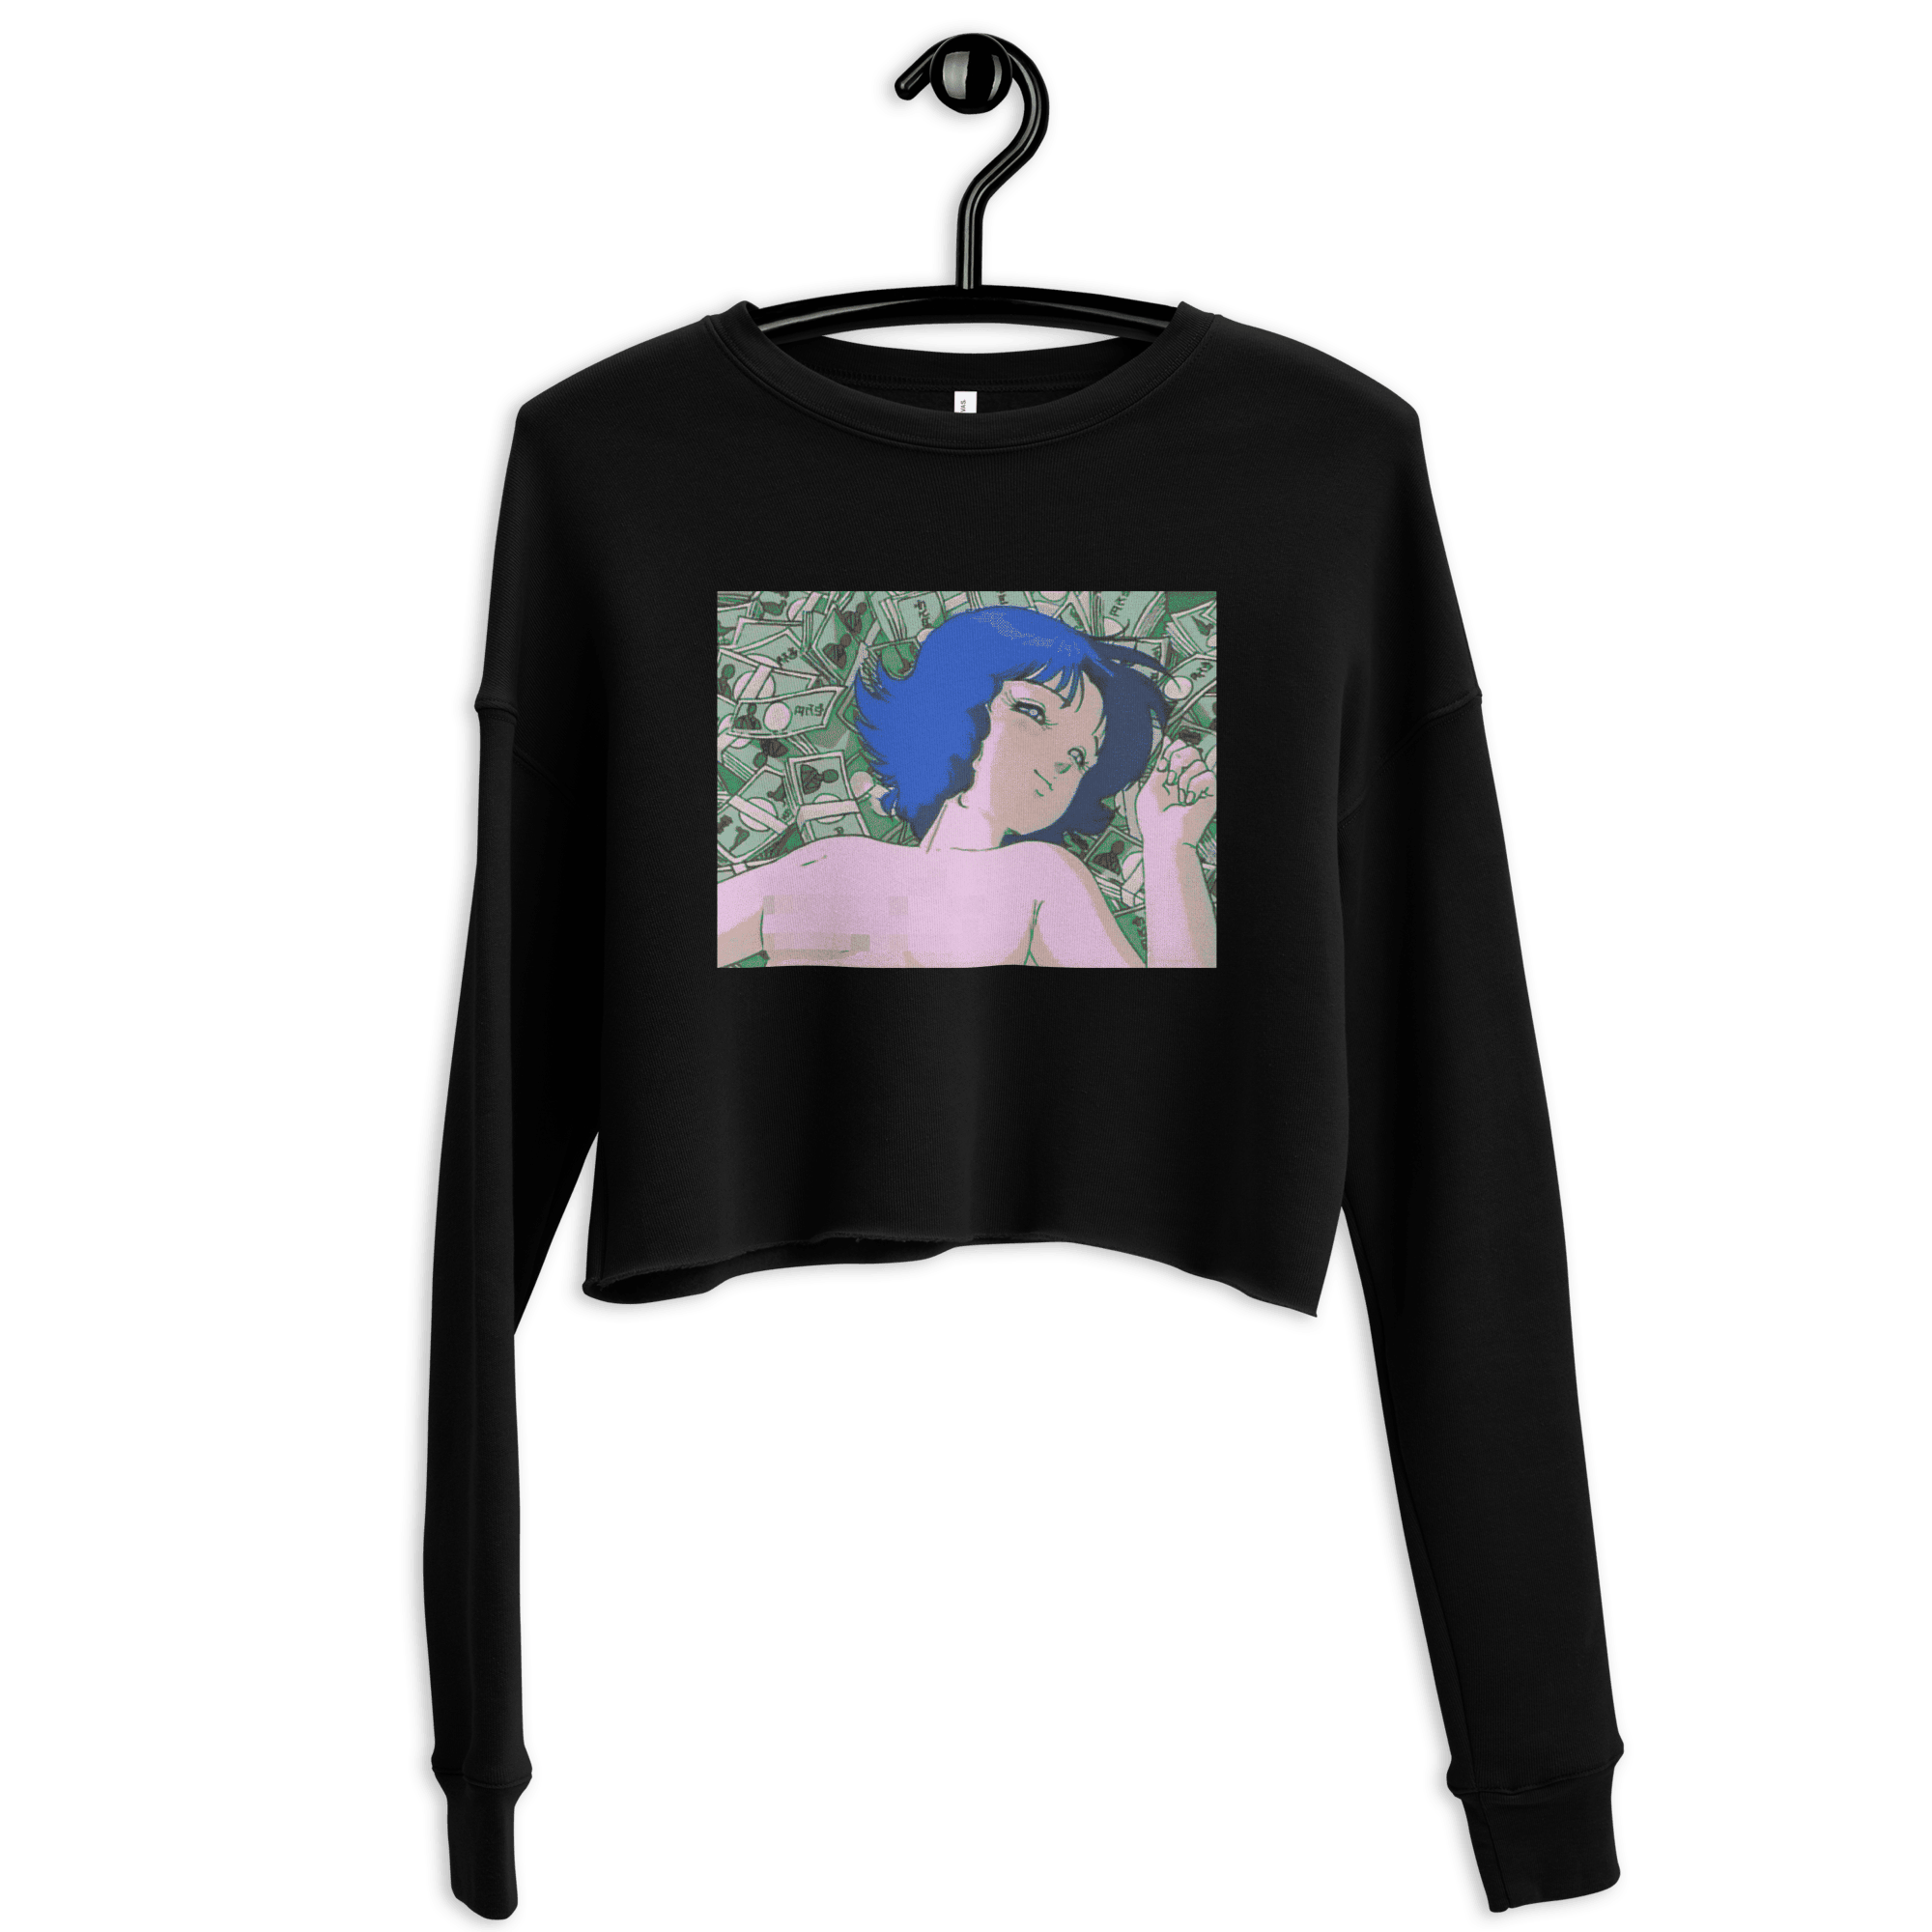 m0n3y® Cropped Sweatshirt - Kikillo Club